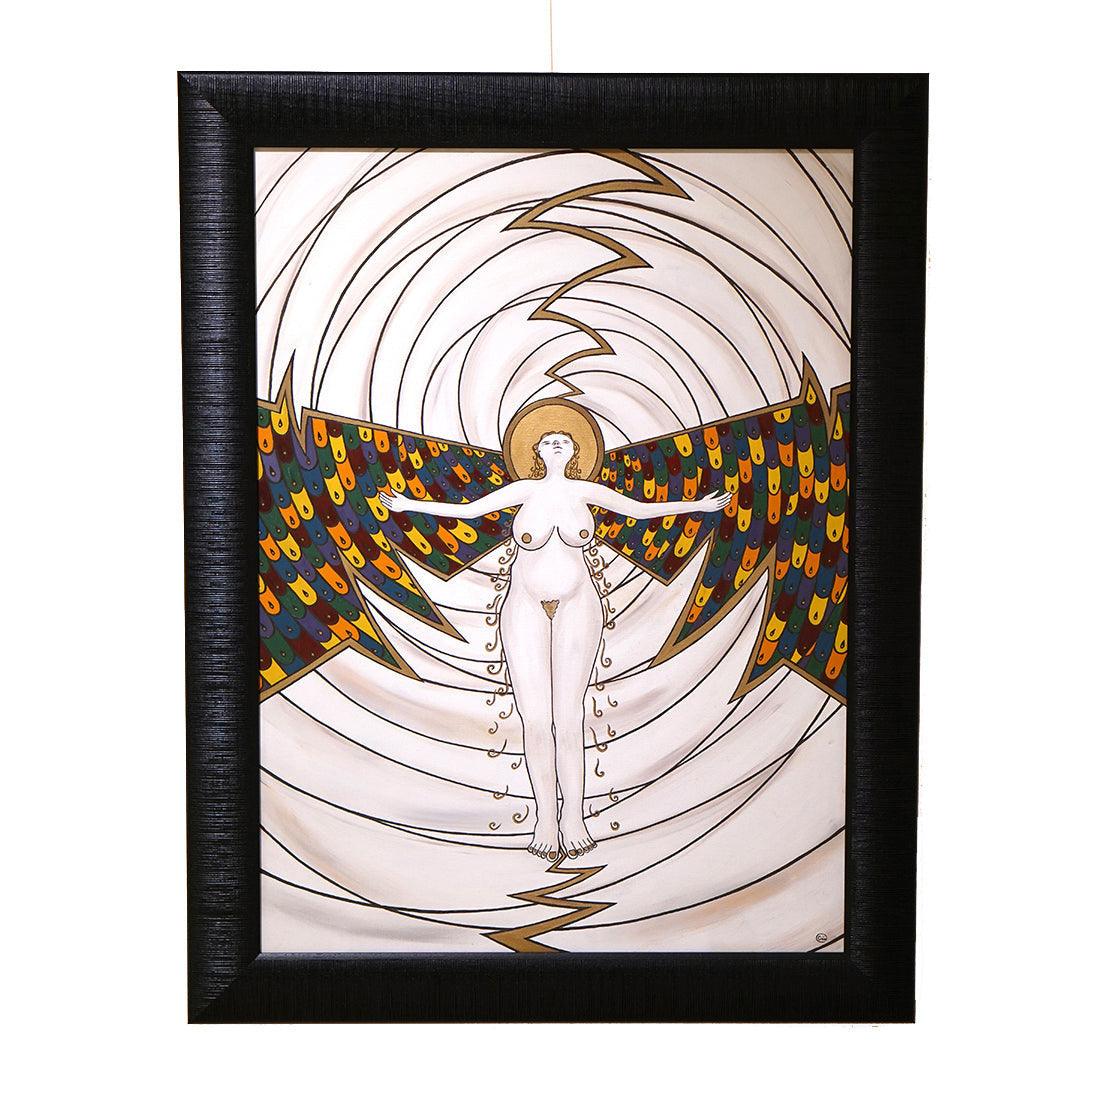 Ascension - Oil on Canvas - 75 x 55 cm